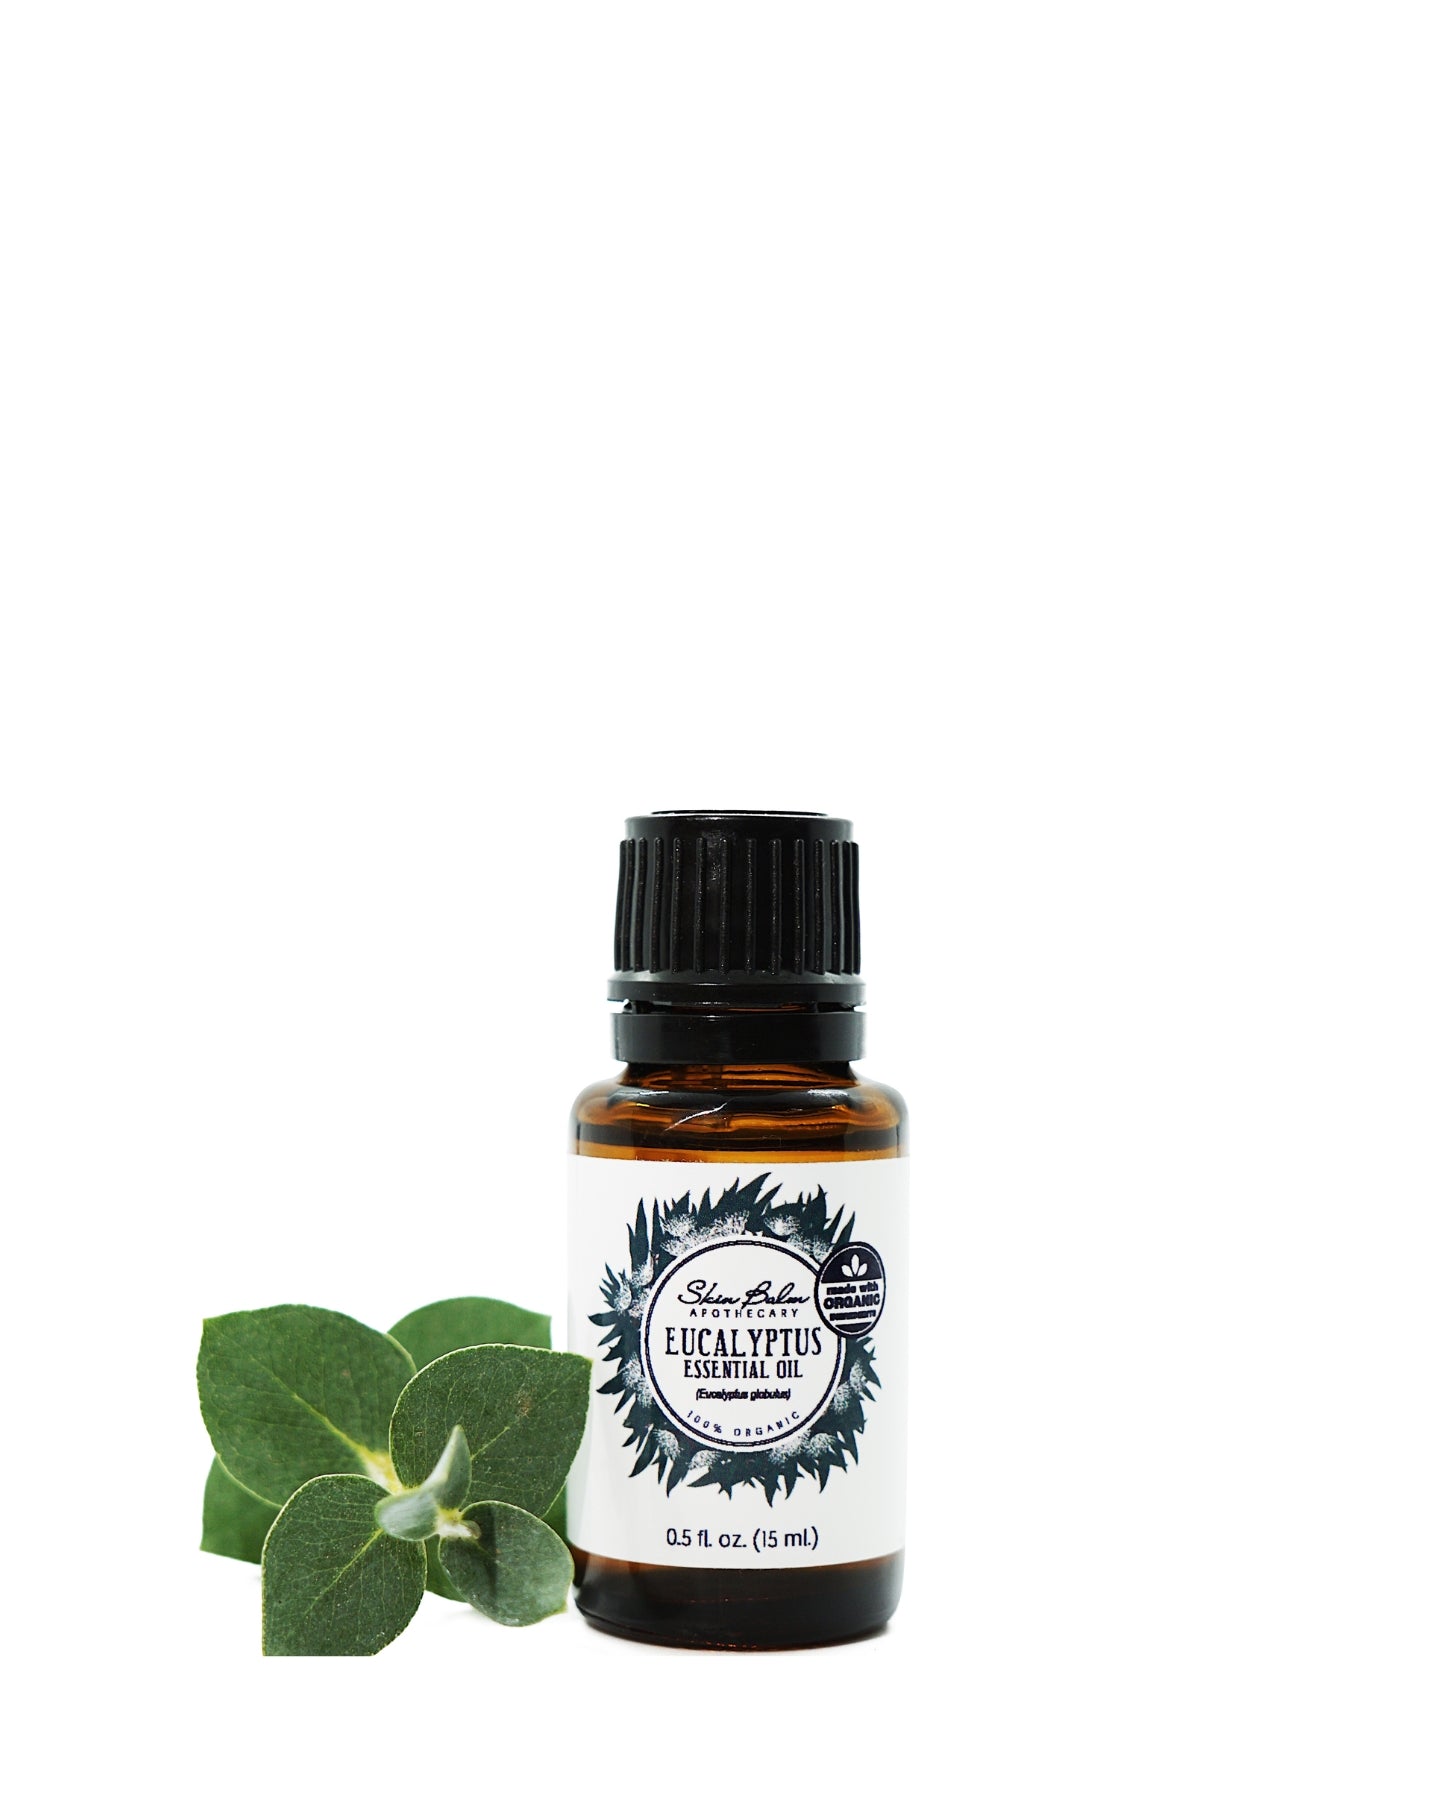 Organic Eucalyptus Essential Oil with a eucalyptus stem against a white background.